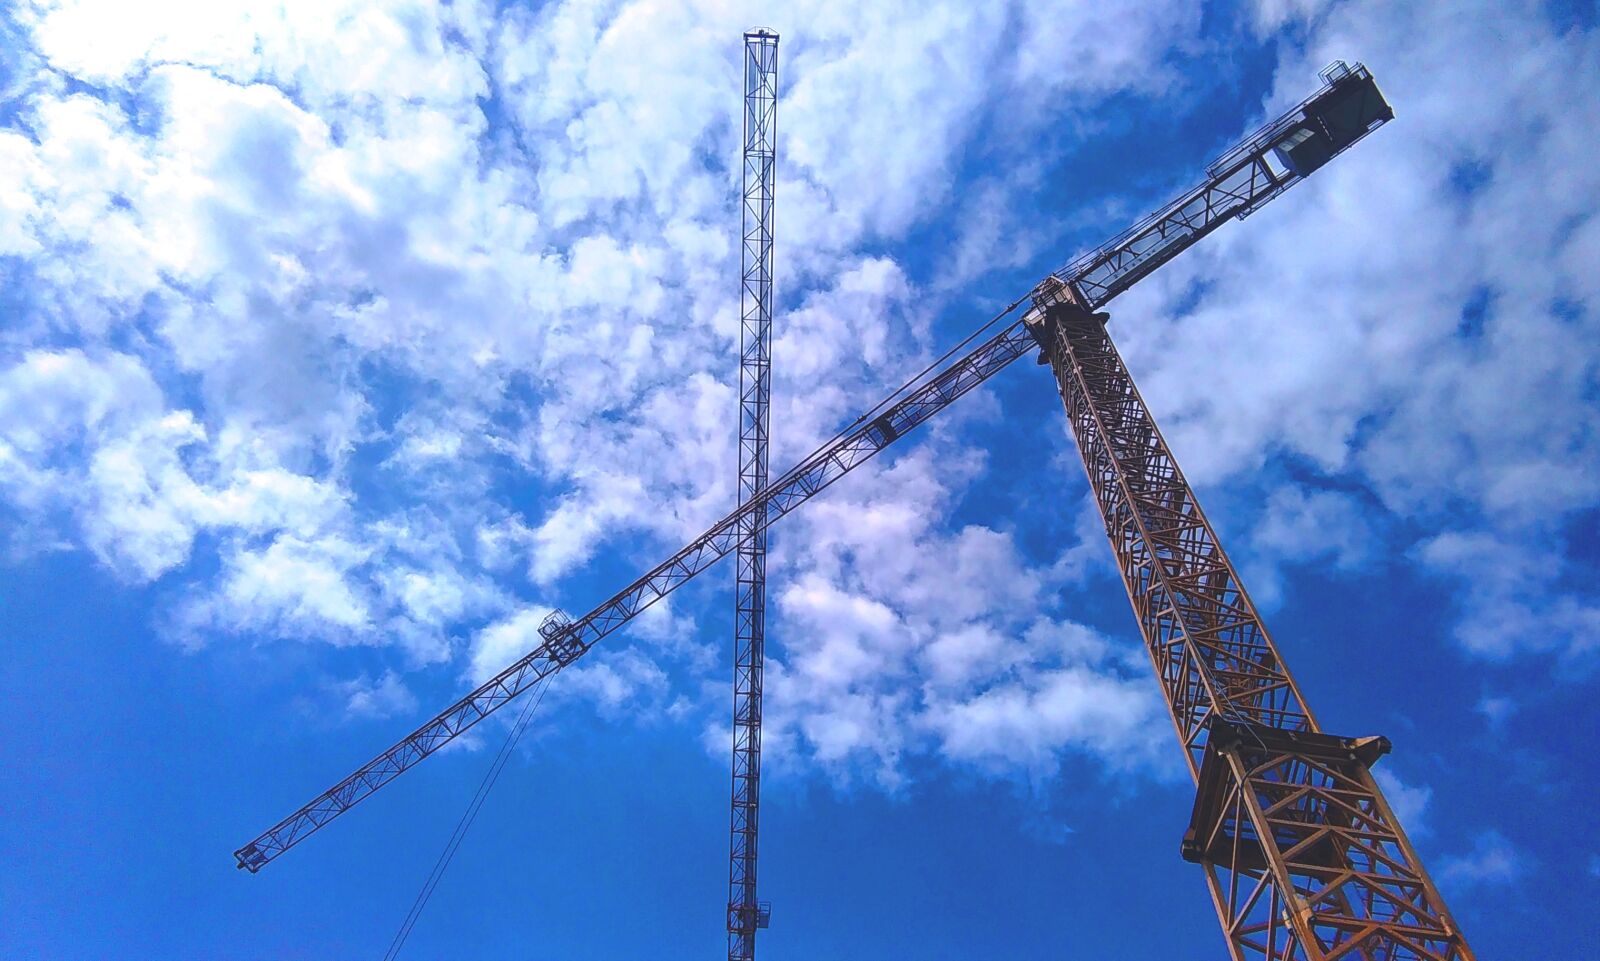 HTC DESIRE 620 sample photo. Clouds, crane, sky, sunny photography